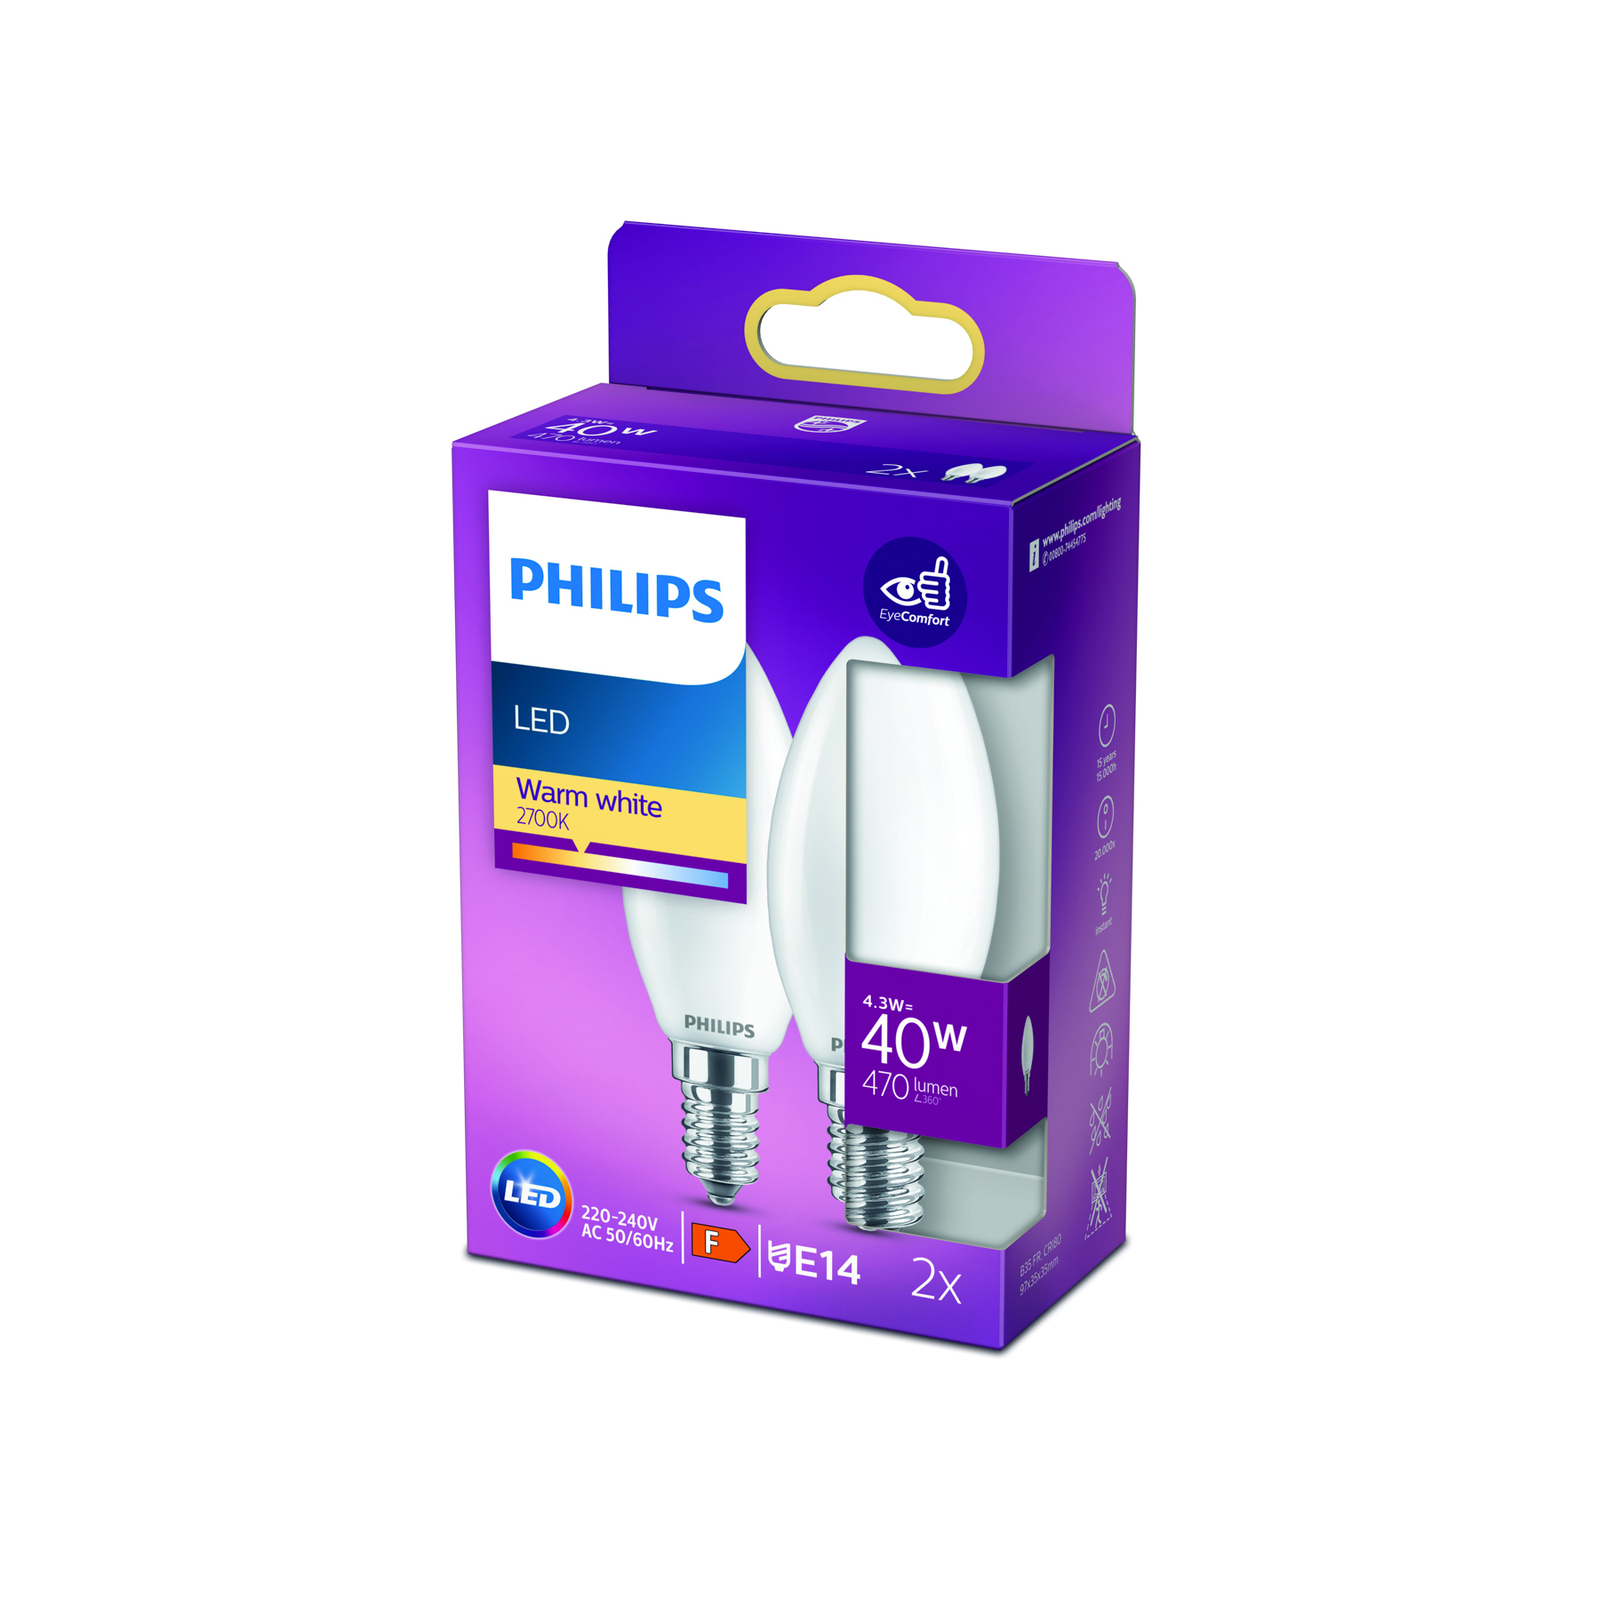 Philips LED candela B35 E14 4,3W 2.700K opale 2x